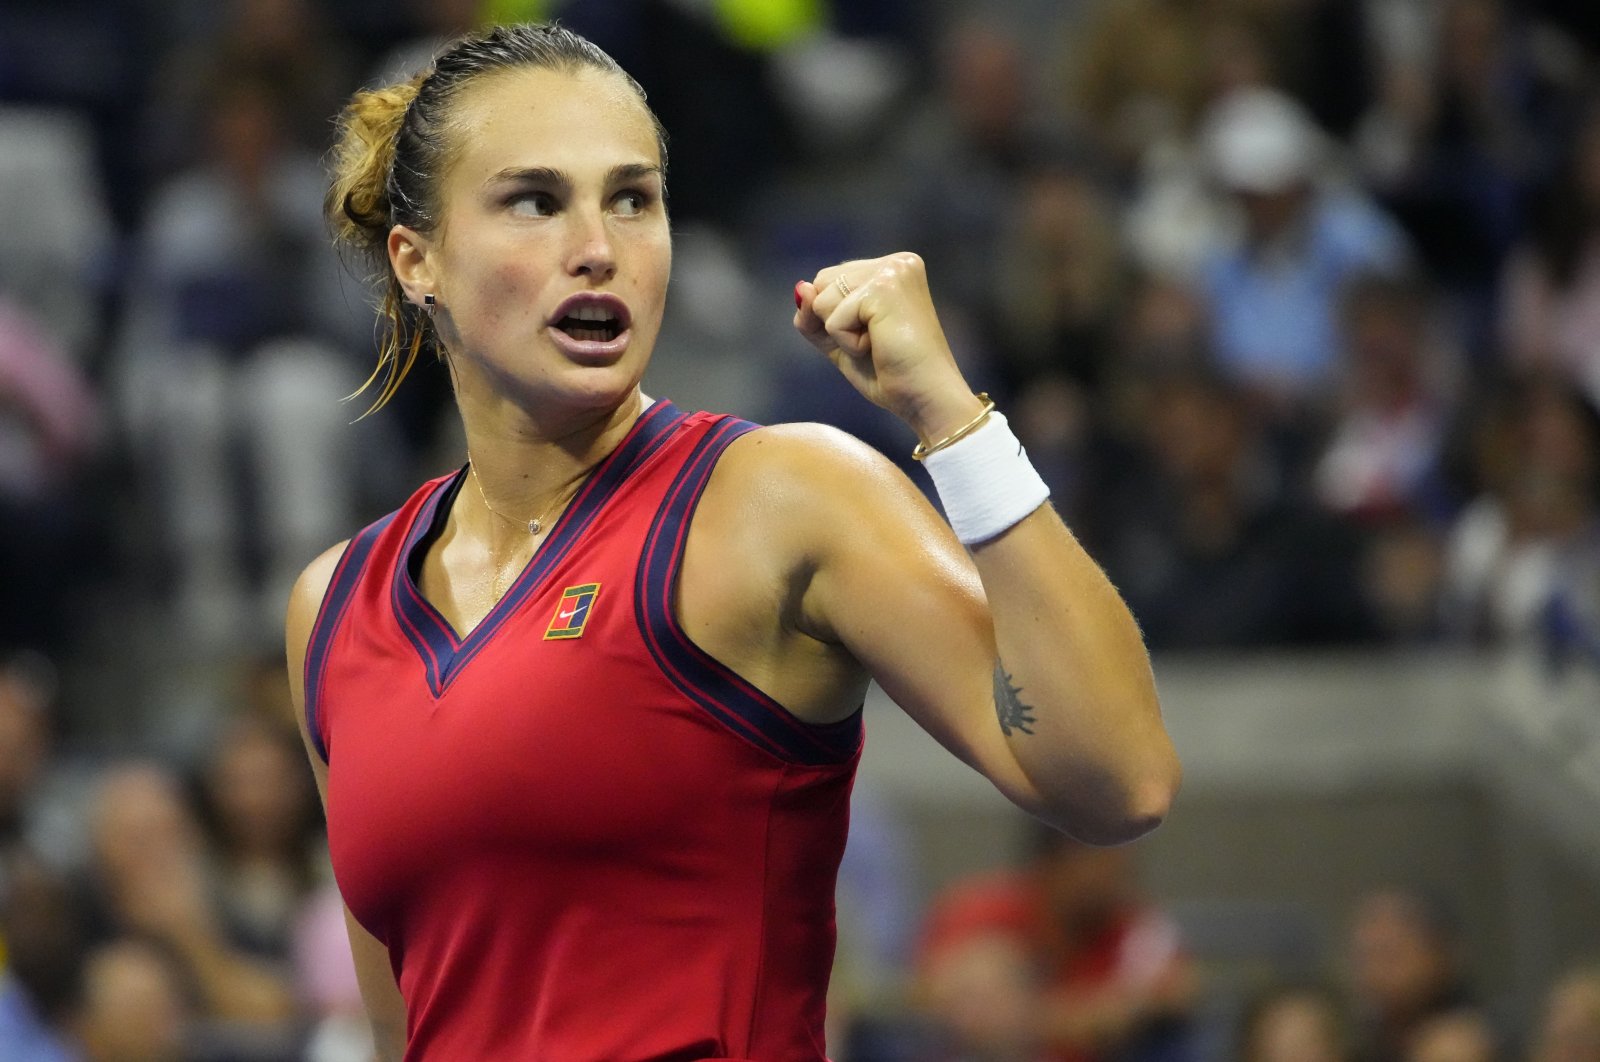 Aryna Sabalenka reacts during a U.S. Open tennis match, in New York, U.S., Sep. 9, 2021. (Reuters Photo)